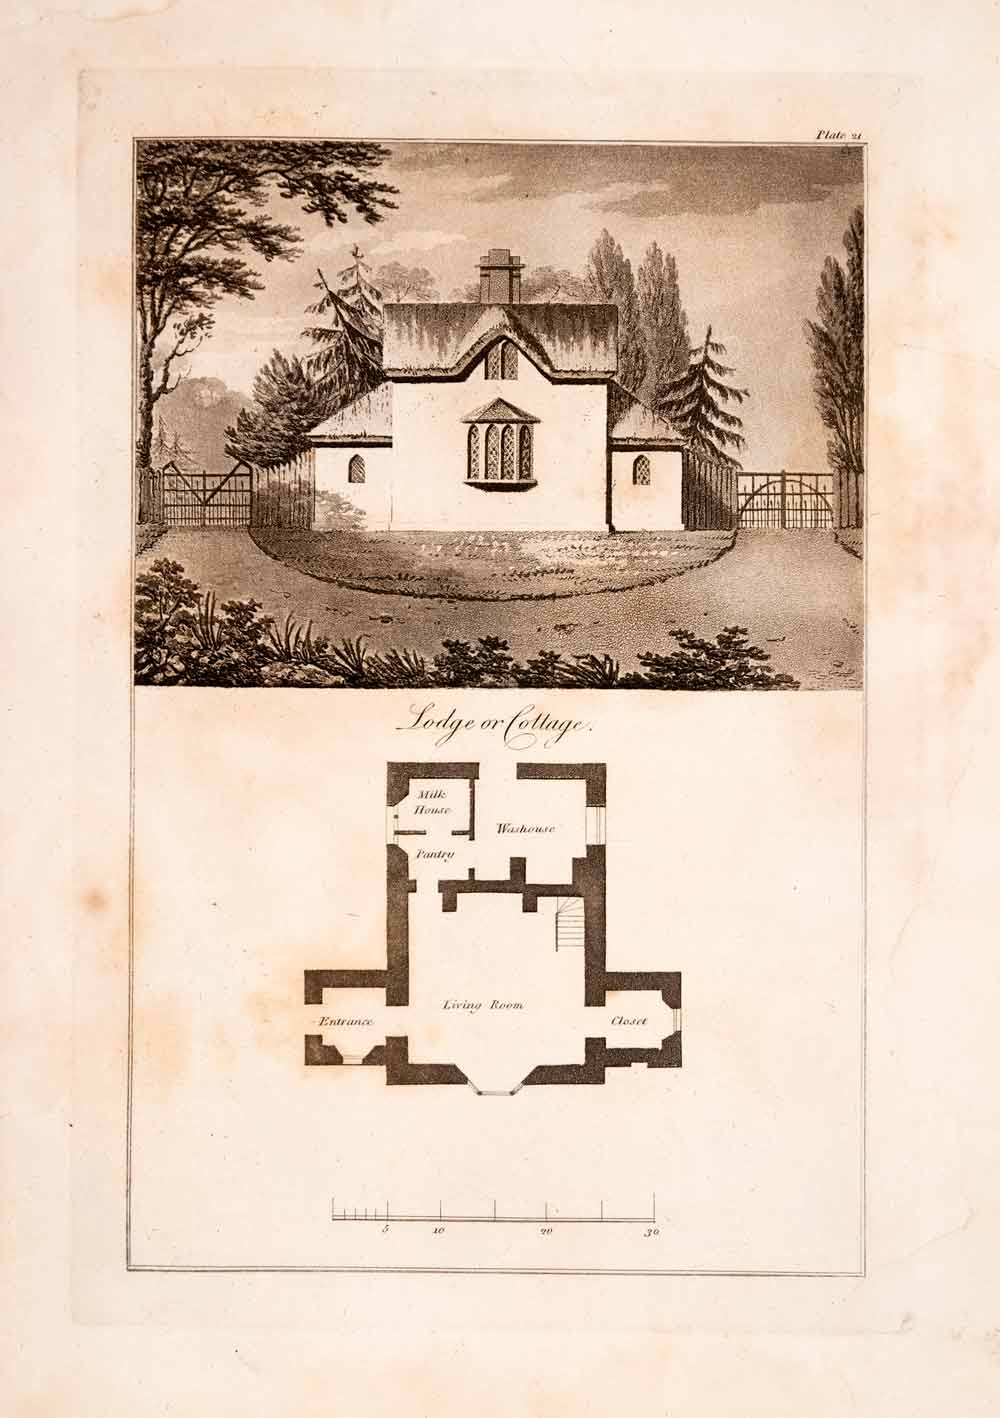 1823 Aquatint Engraving John Plaw Villa Lodge Cottage Thatched Roof Ferme JPA1